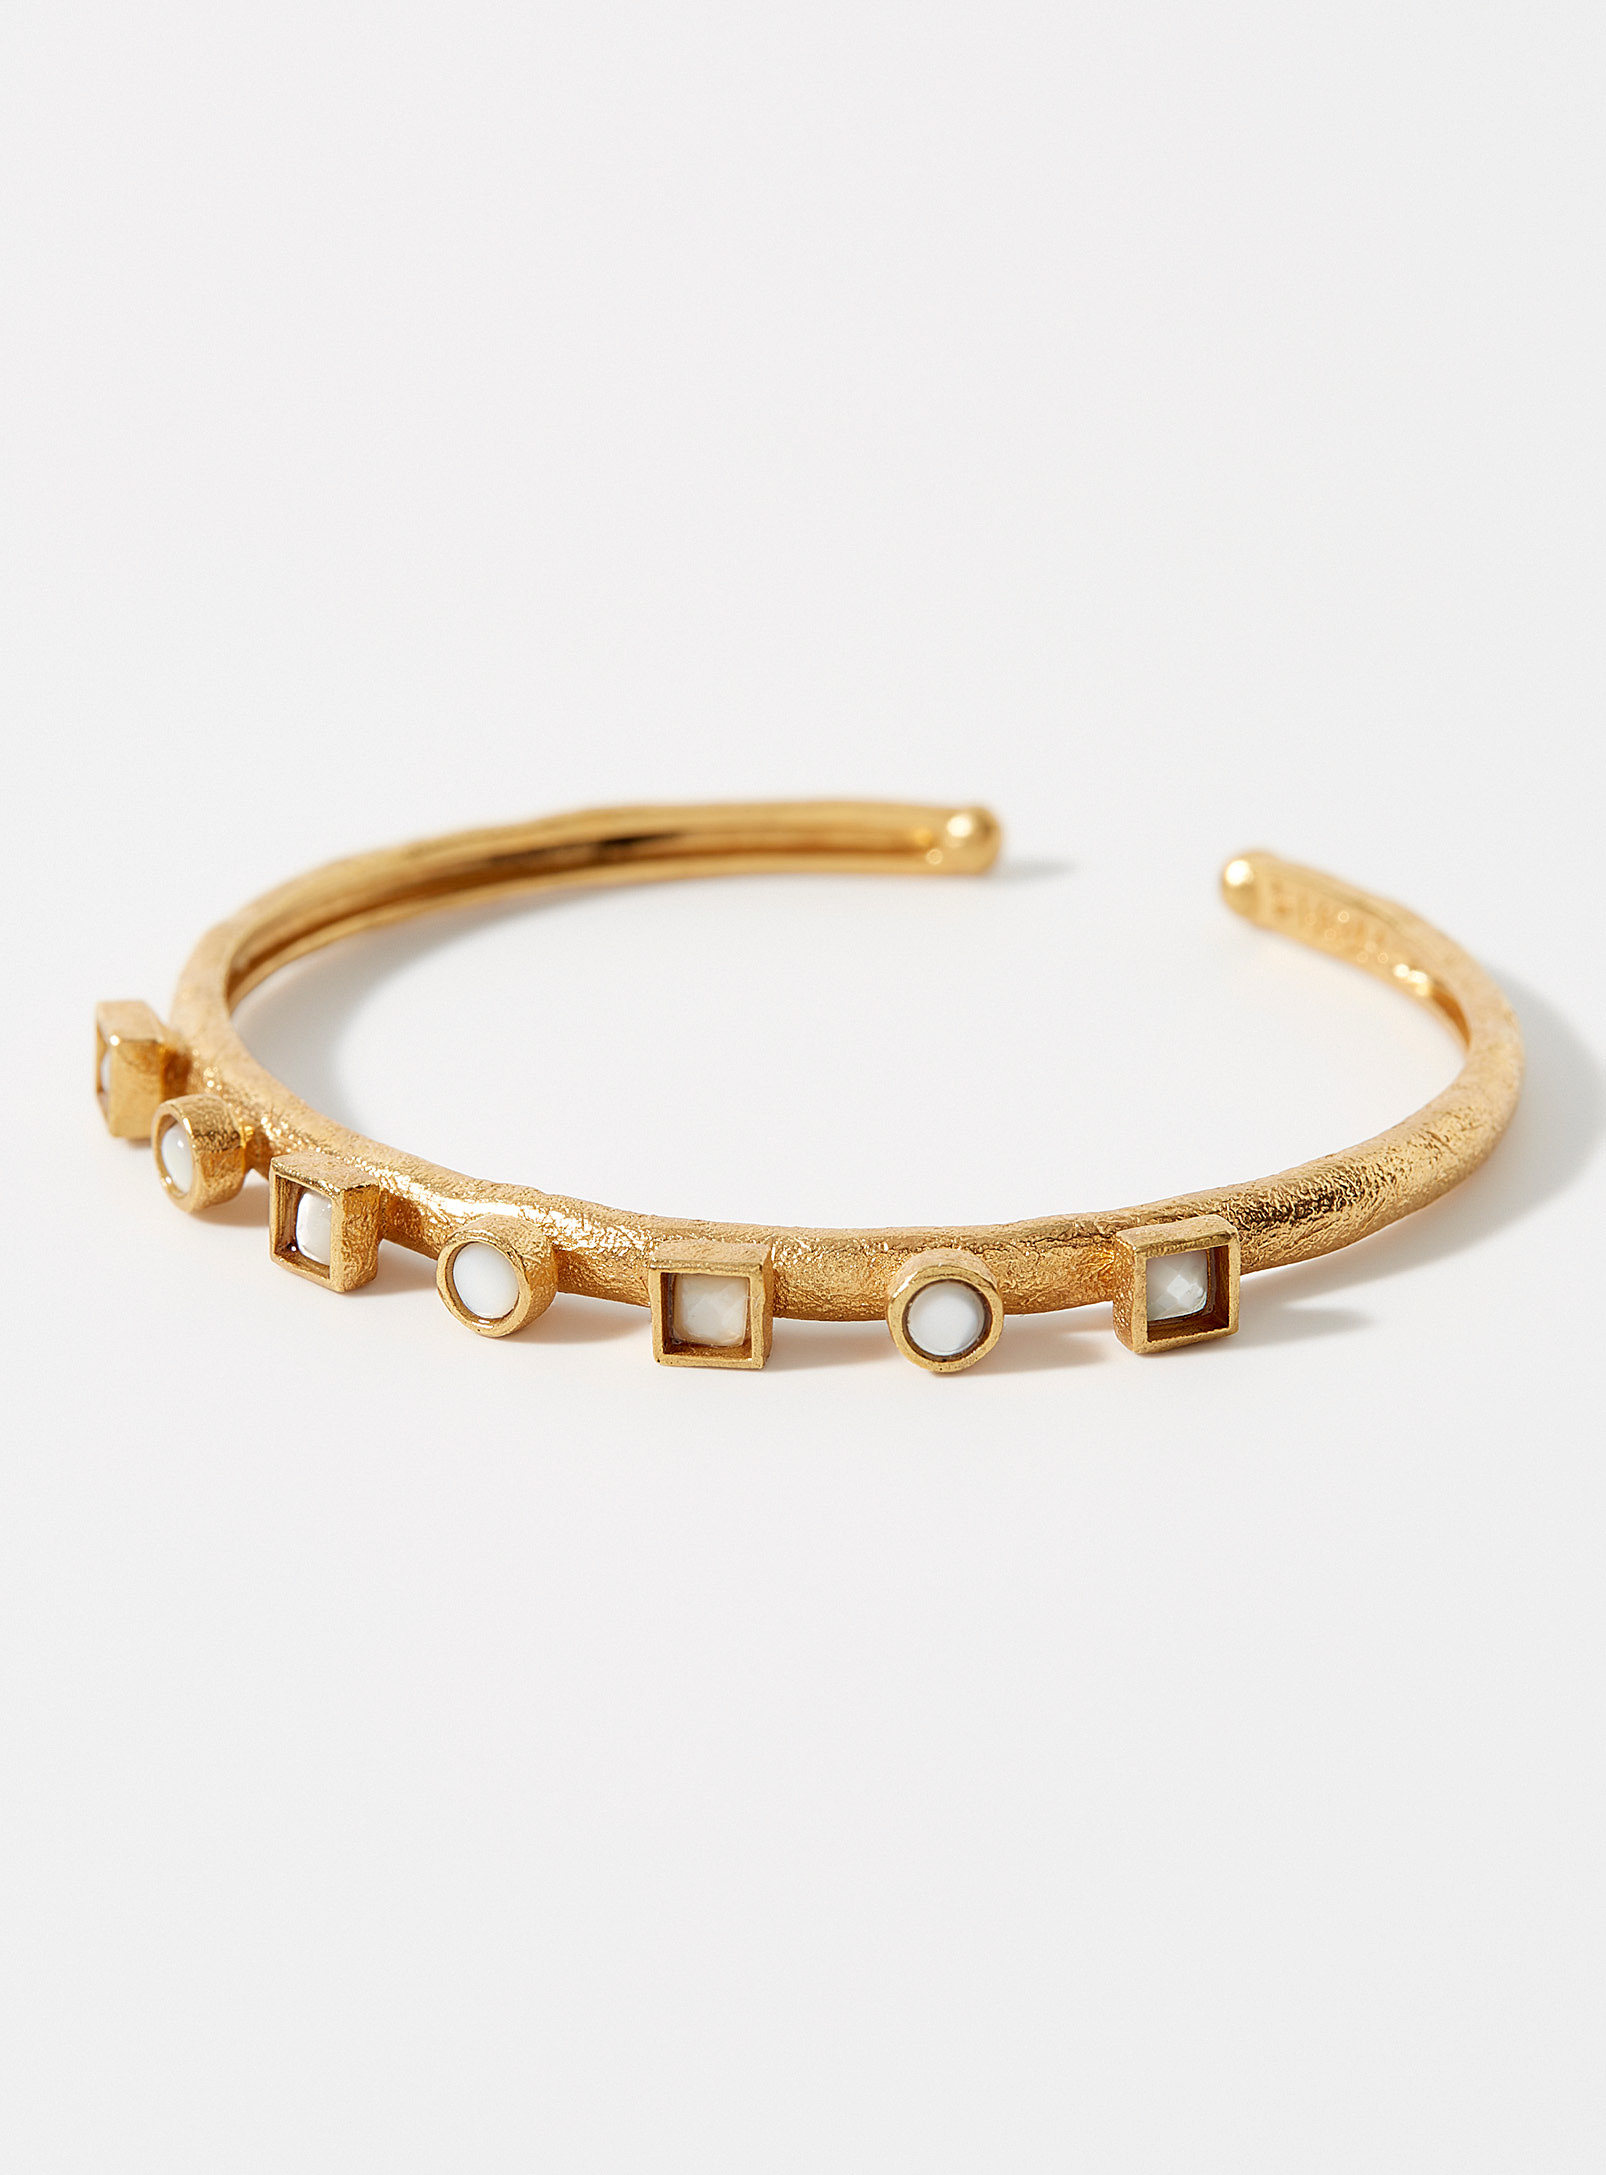 LA2L - Women's Medusa cuff bracelet